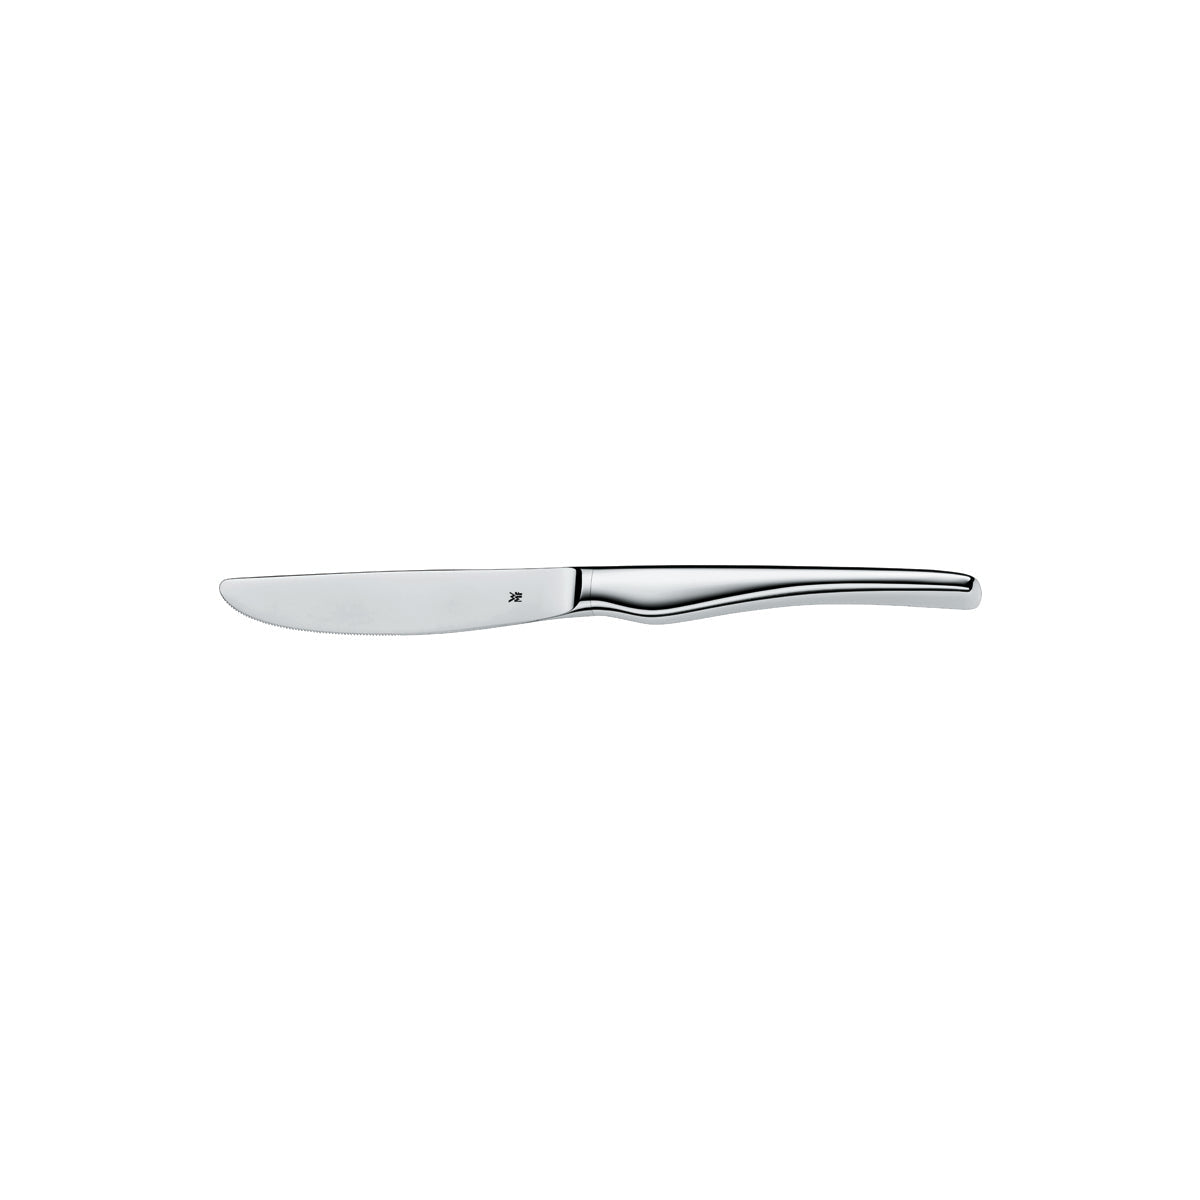 54.1603.6039 WMF Epos Table Knife Silverplated Tomkin Australia Hospitality Supplies